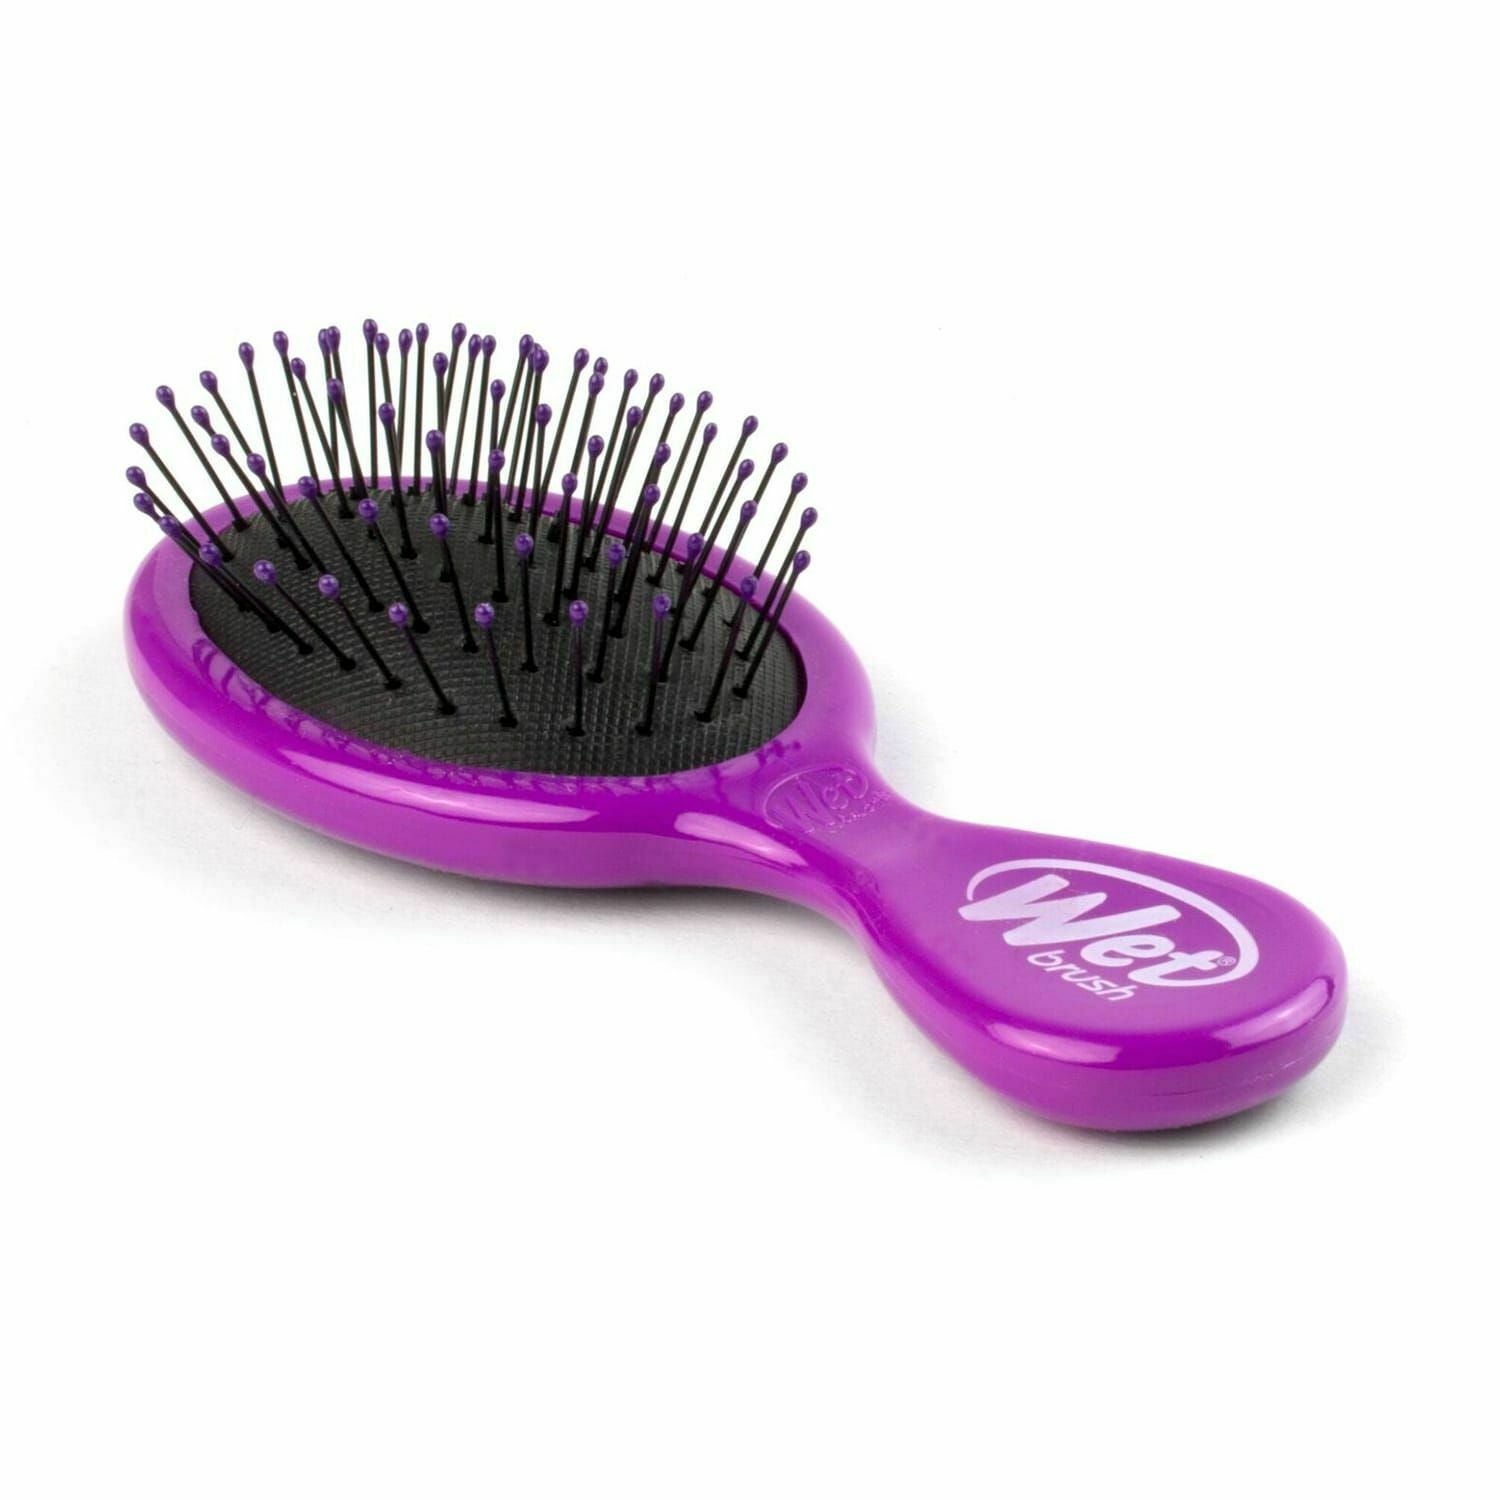 Wet Brush Original Detangle Purple